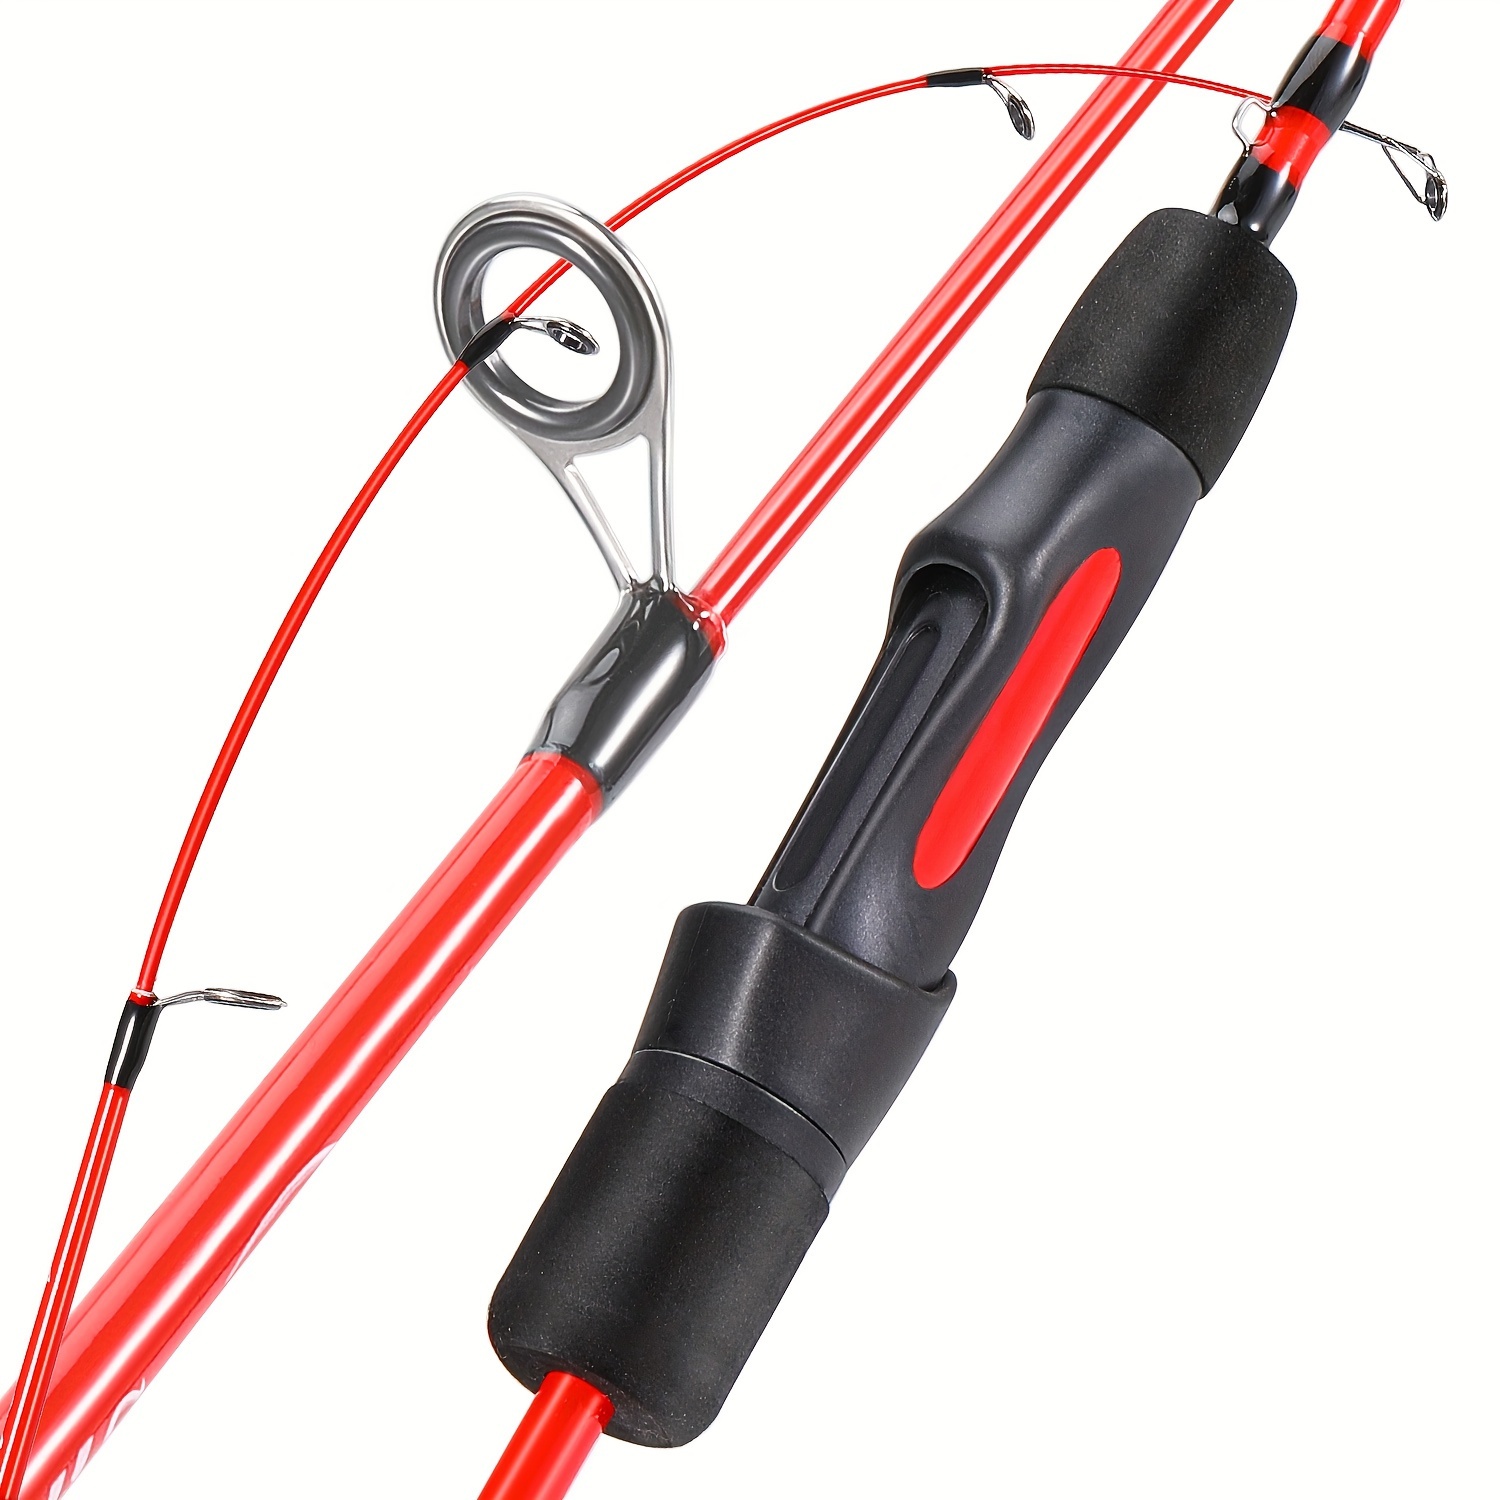 Ice Fishing Pole Set, Portable Ultralight Ice Fishing Rod Complete